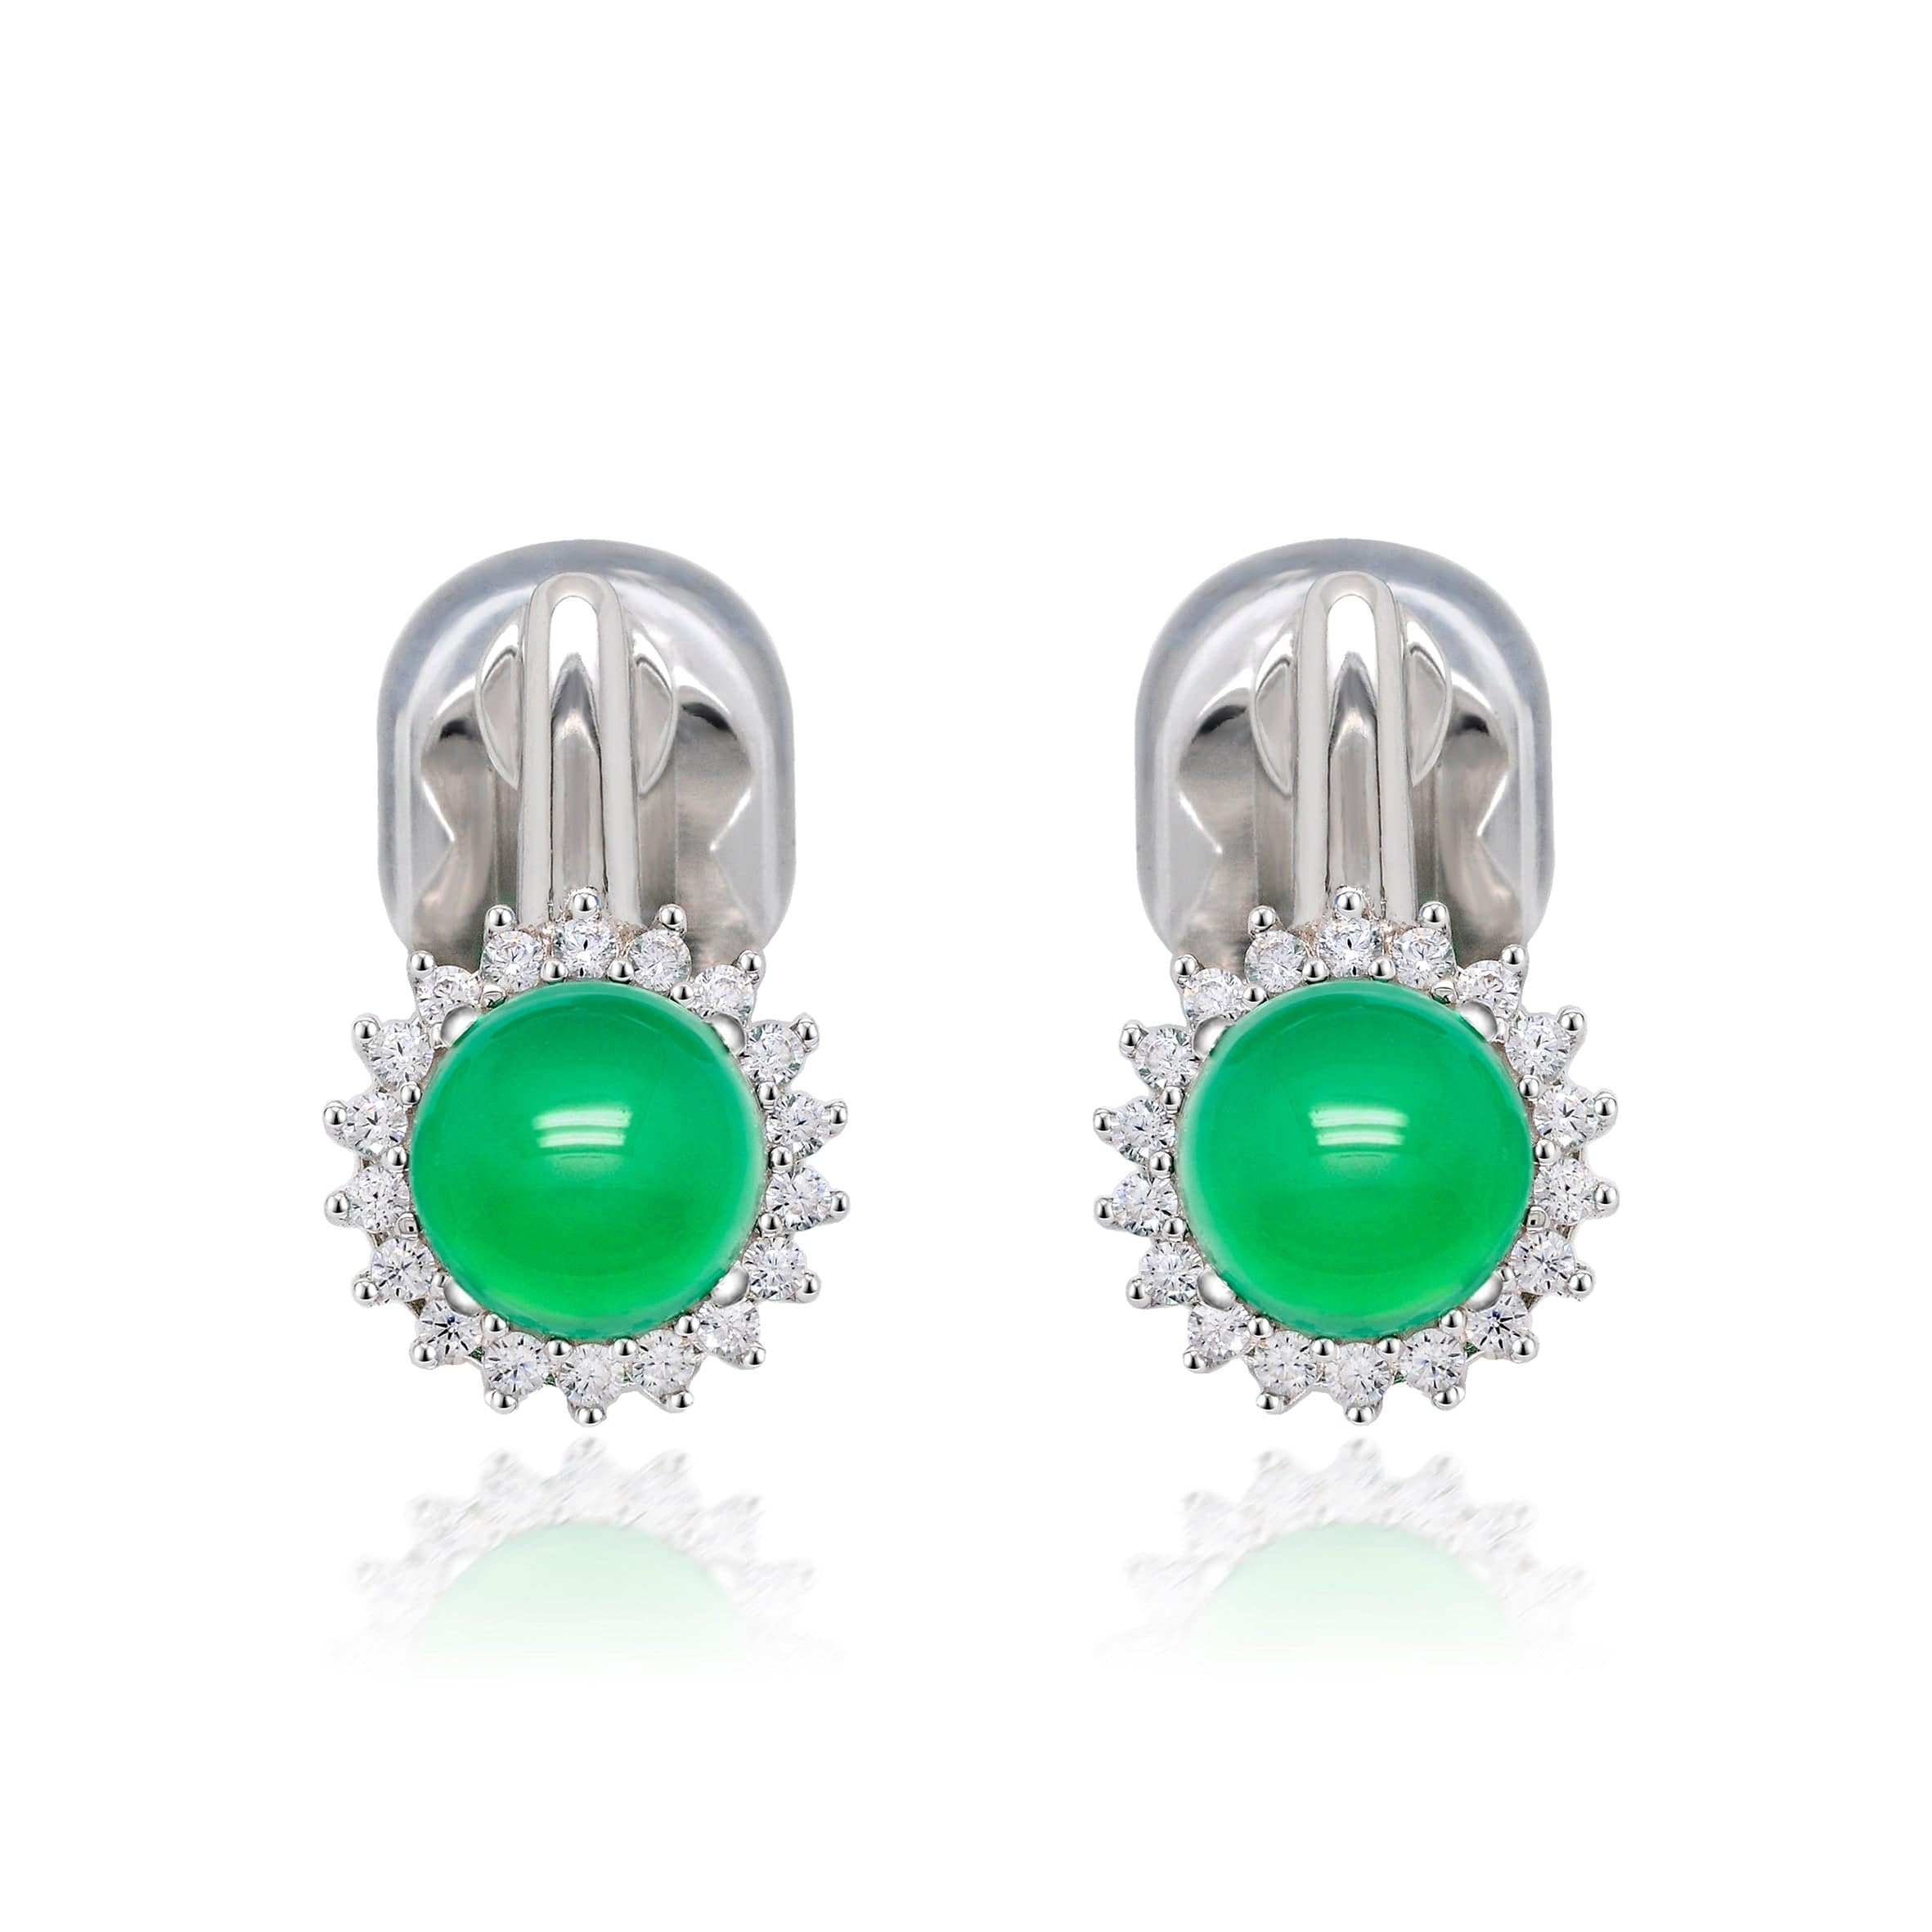 Lynora Silver Earrings Sterling Silver / Green Verdant Glass Sphere earrings